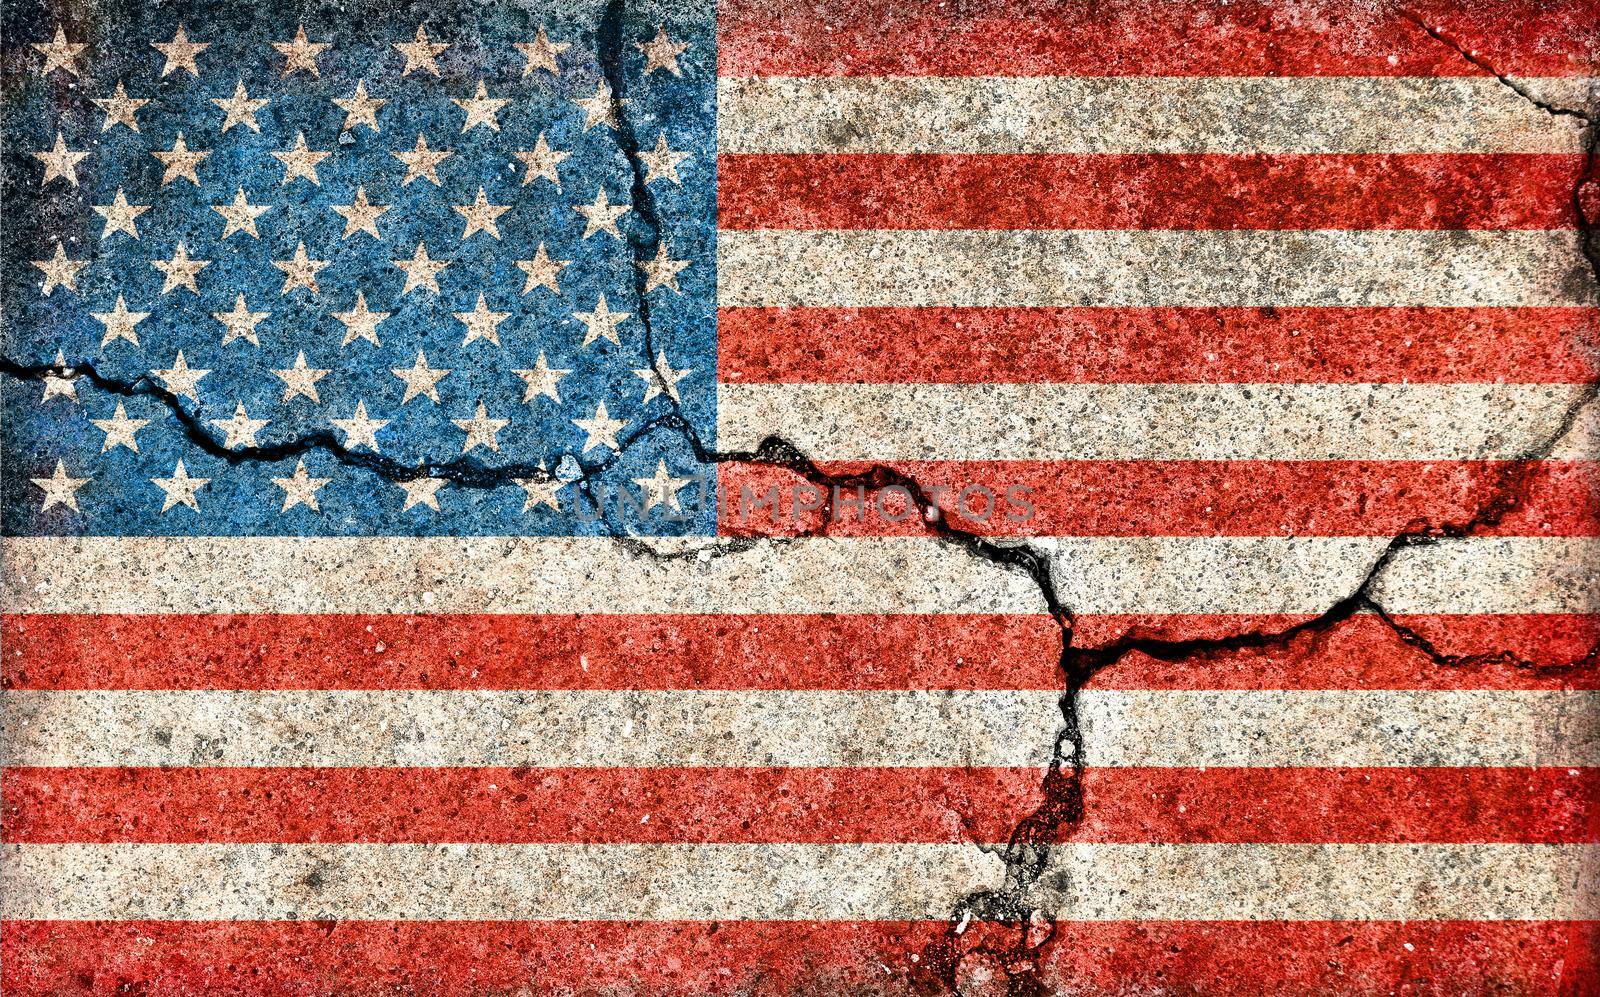 Grunge country flag illustration (cracked concrete background) / USA, United states of America